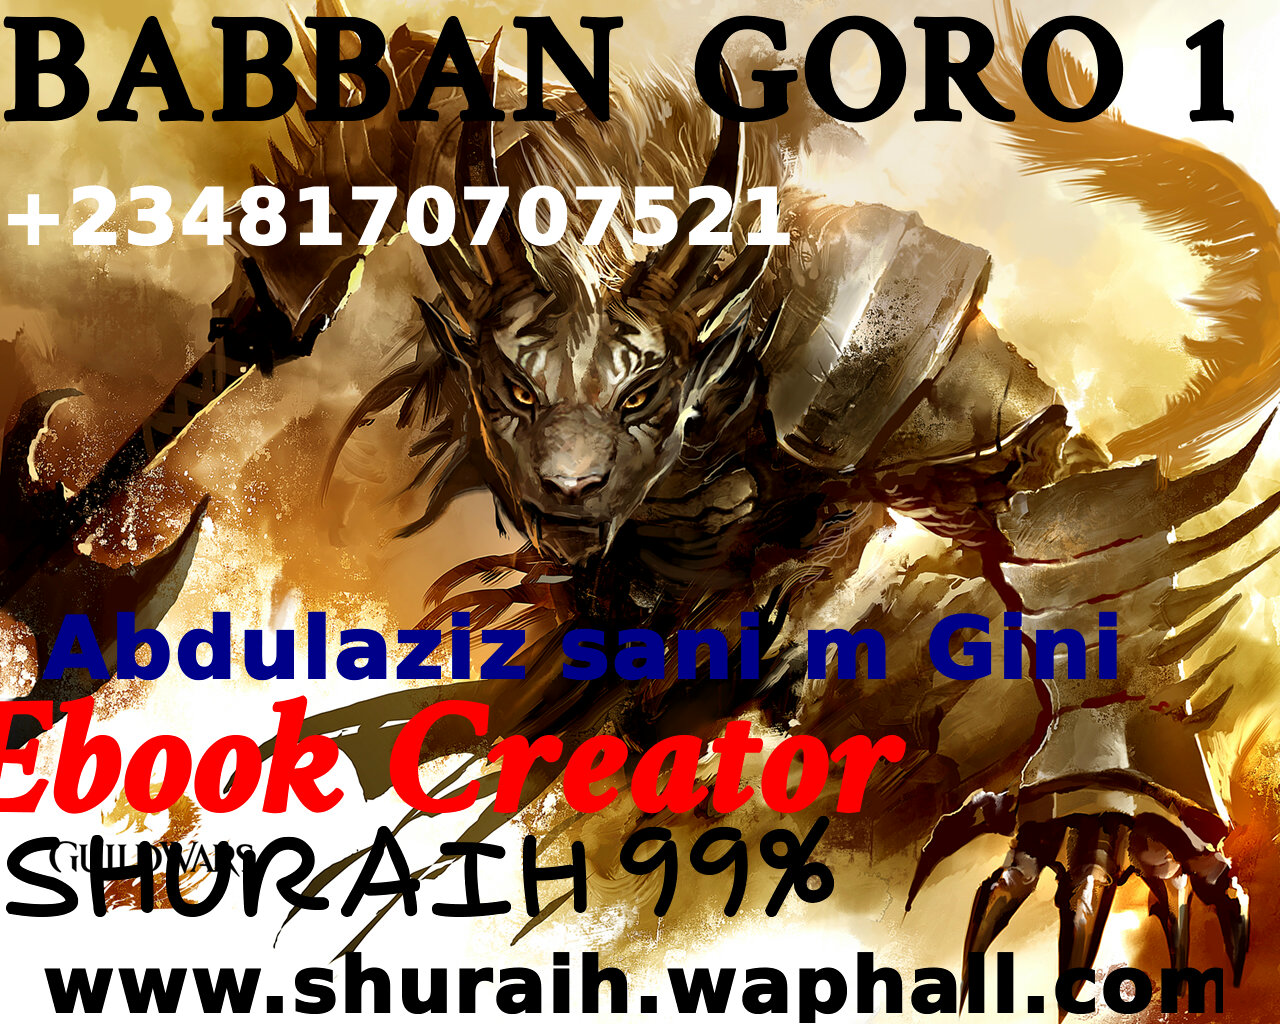 hausaebooks:- Babban Goro 1 na Abdulaziz sani m/gini